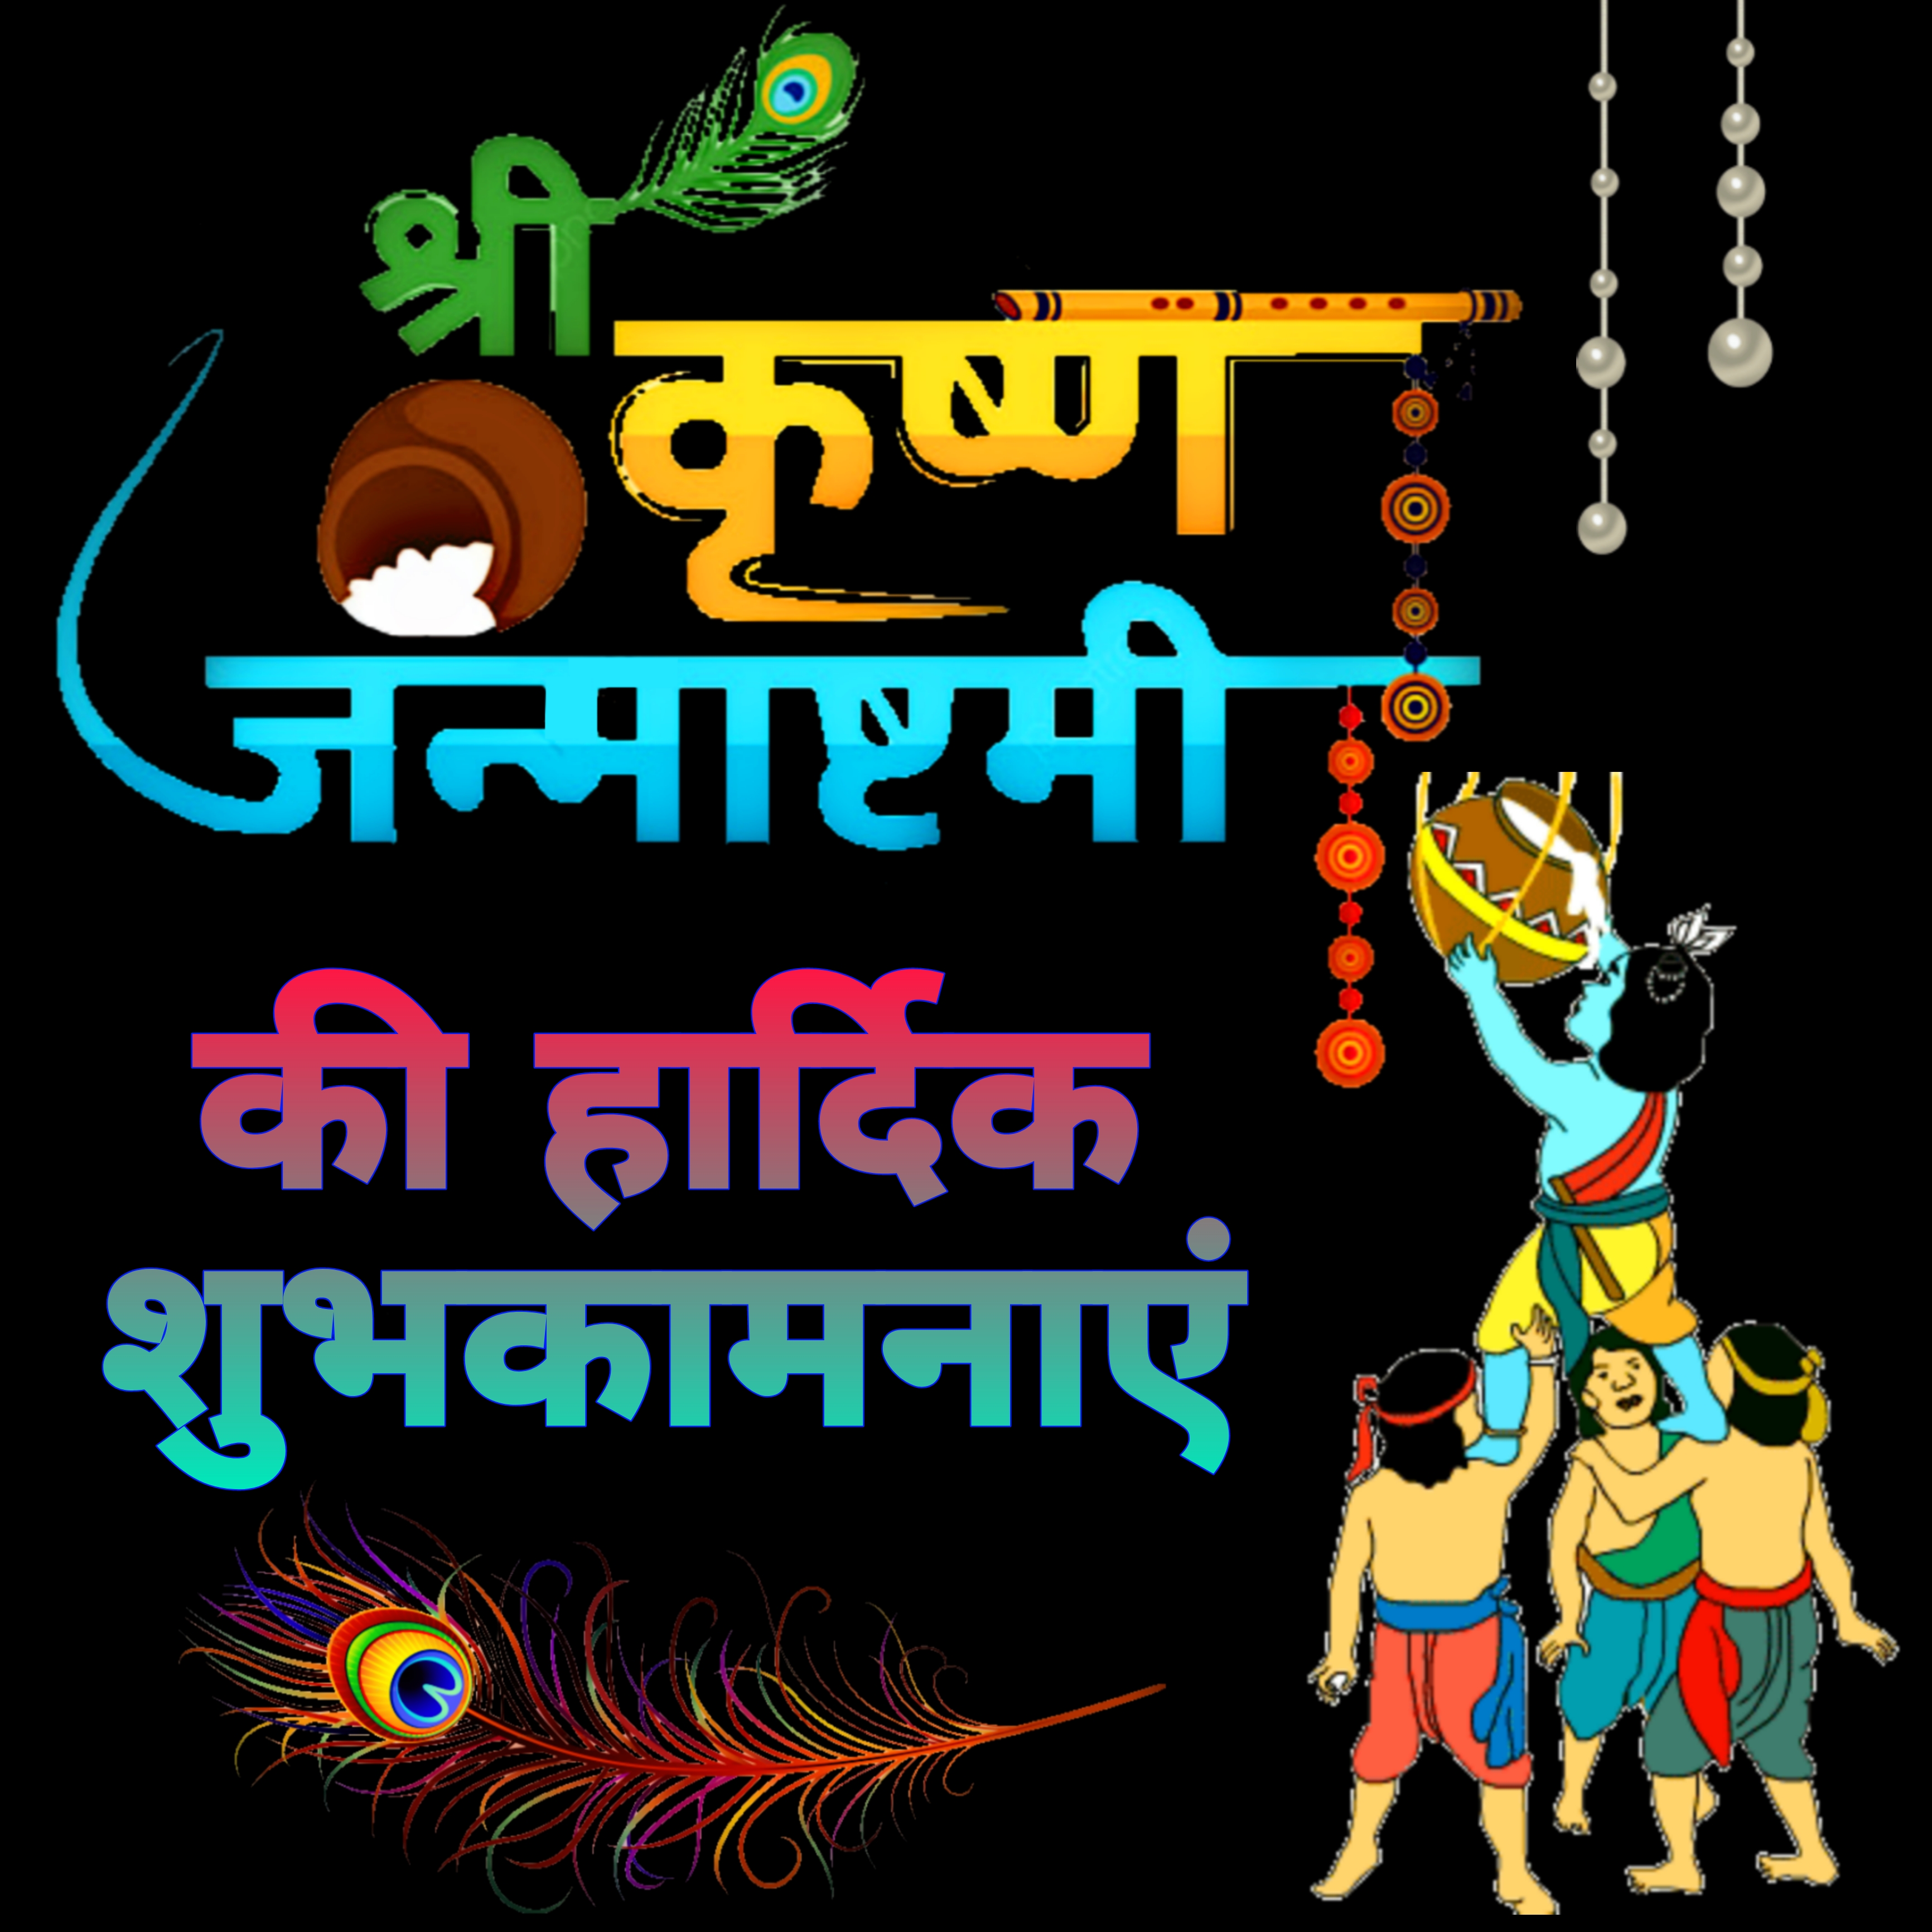 Krishna janmashtami dp image wallpaper for WhatsApp and Instagram download | Krishna Janmashtami ki shubhkamnaen | कृष्ण जन्माष्टमी वॉलपेपर